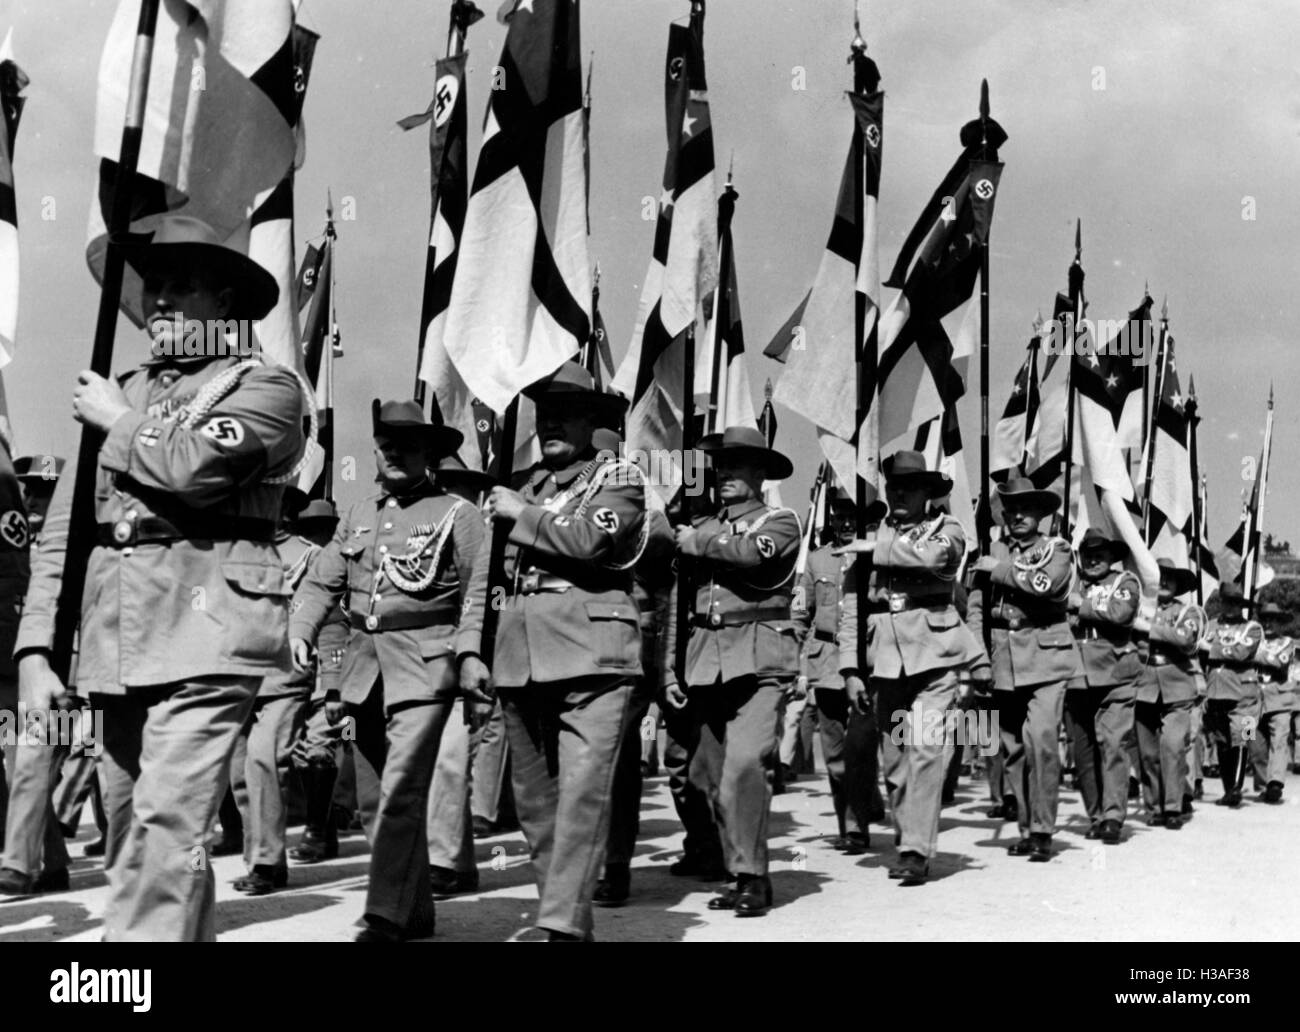 Rallye der Reichskolonialbund (Reich Colonial League) am Heldenplatz in Wien, 1939 Stockfoto